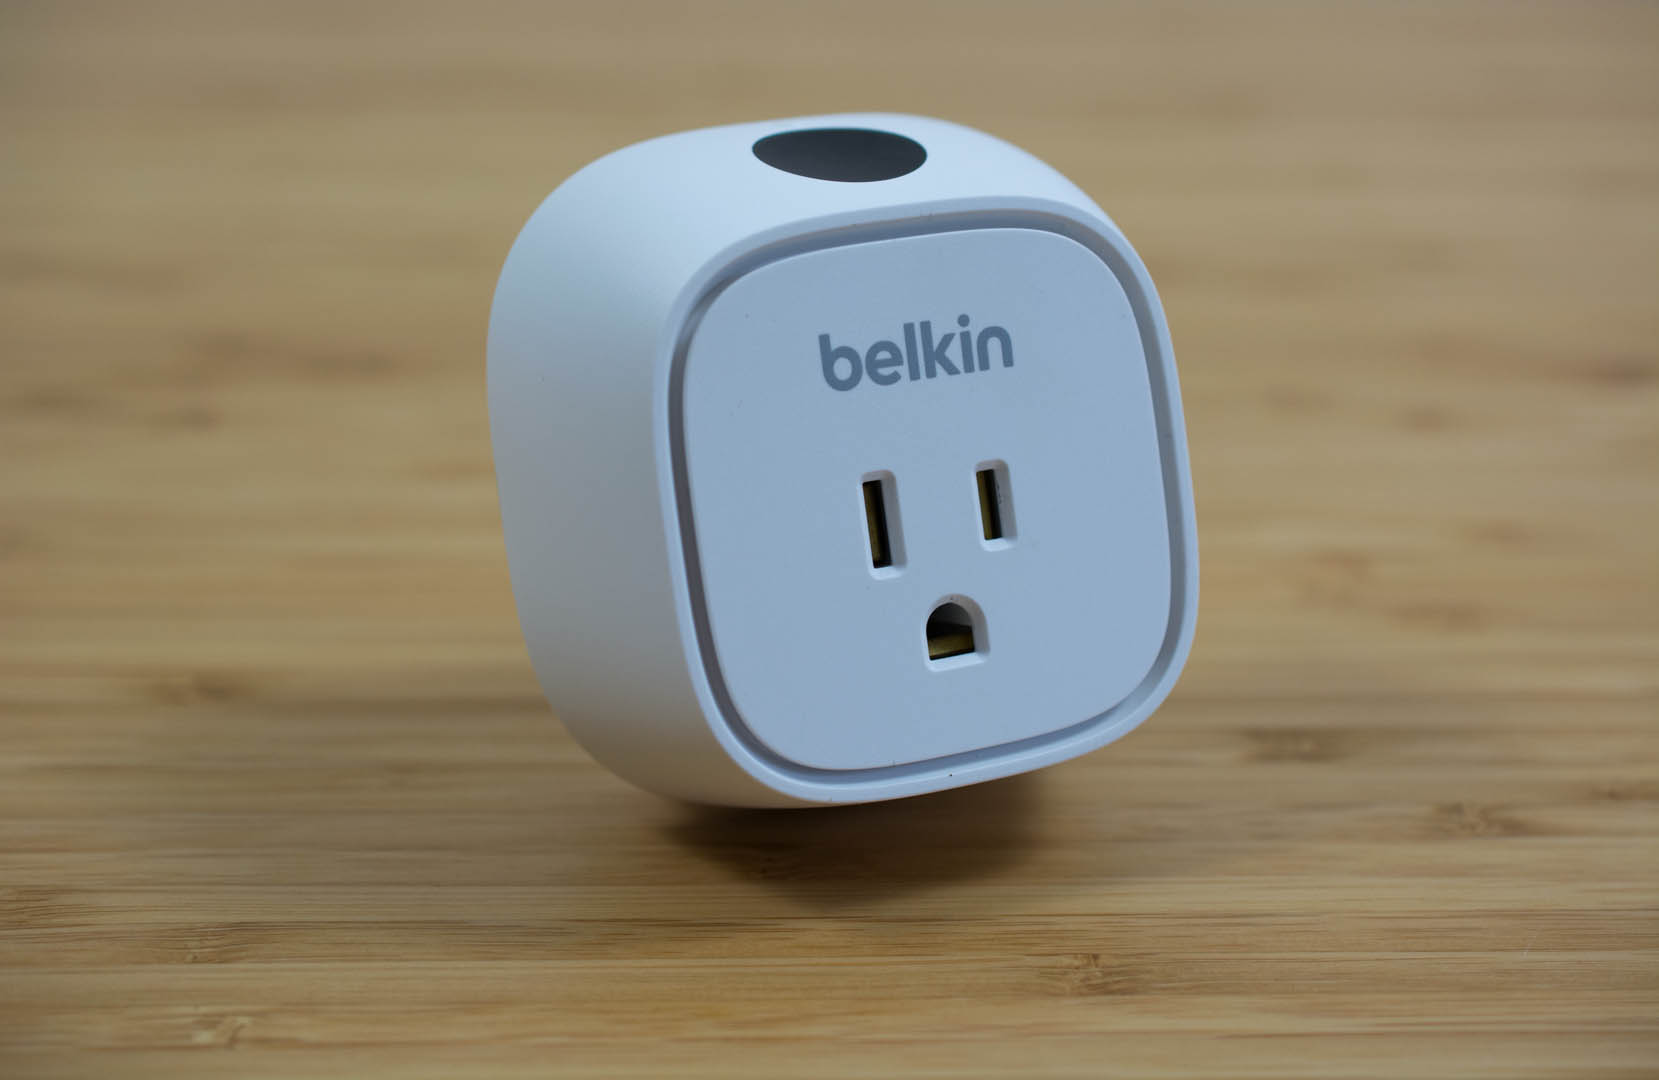 Belkin WeMo Crock-Pot Review: Not The Smartest Of Smart Devices